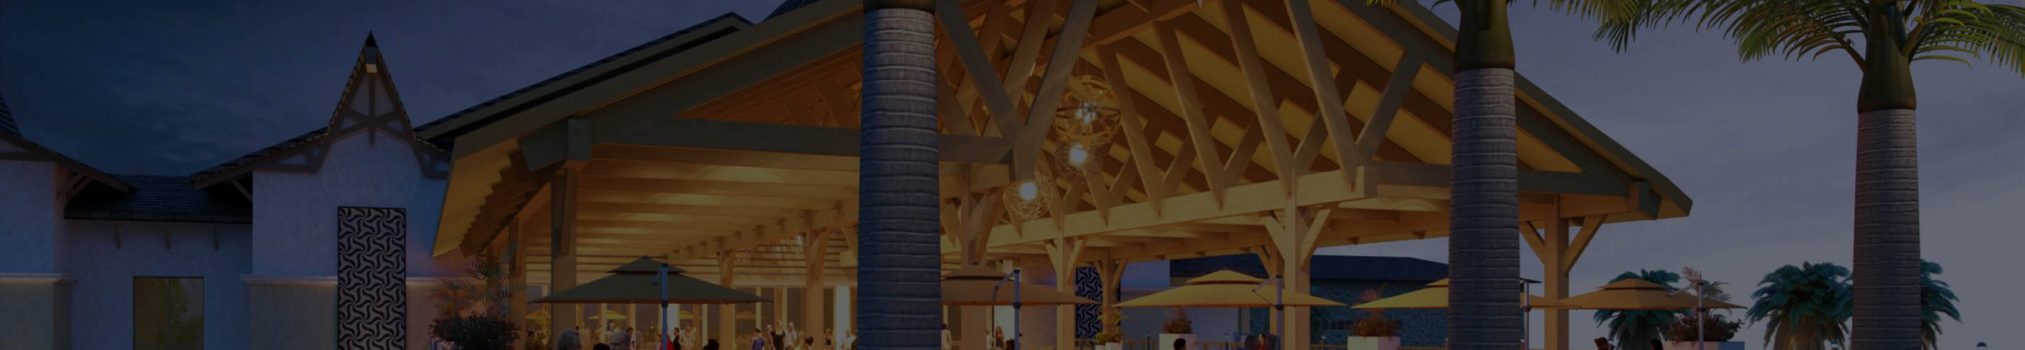 Speke Resort Convention Center Uganda building slider image